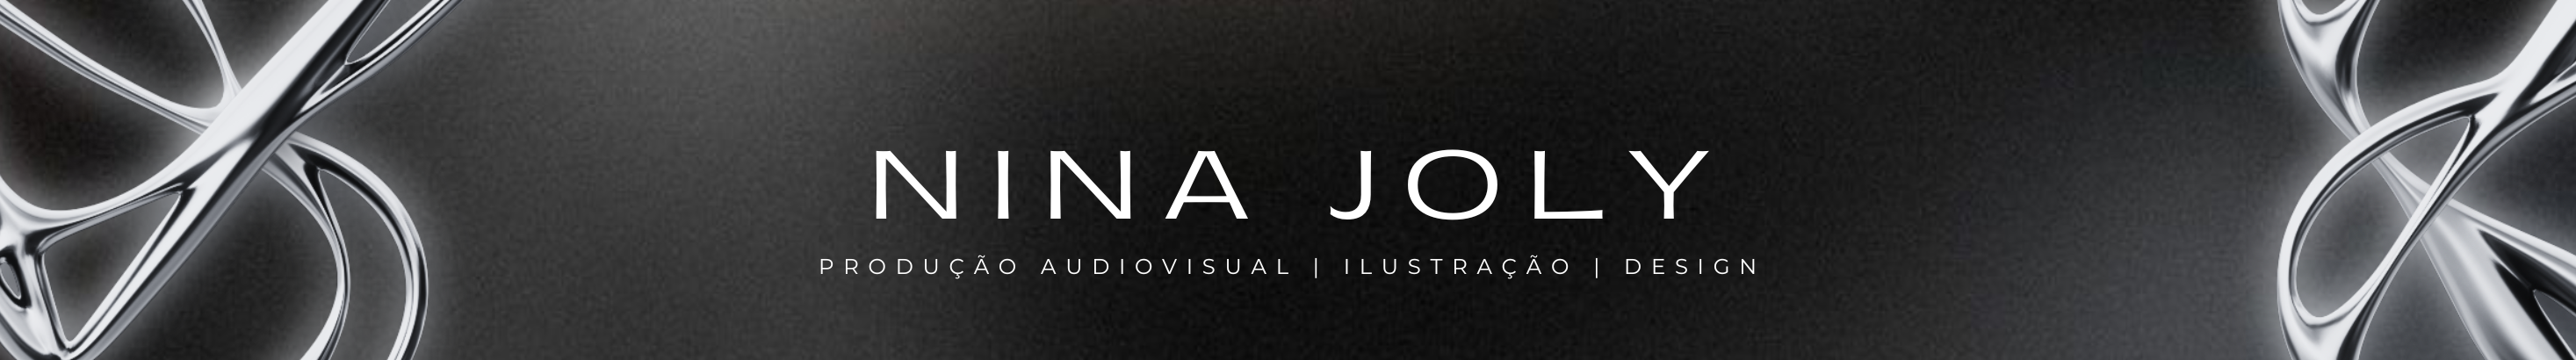 Nina Joly's profile banner